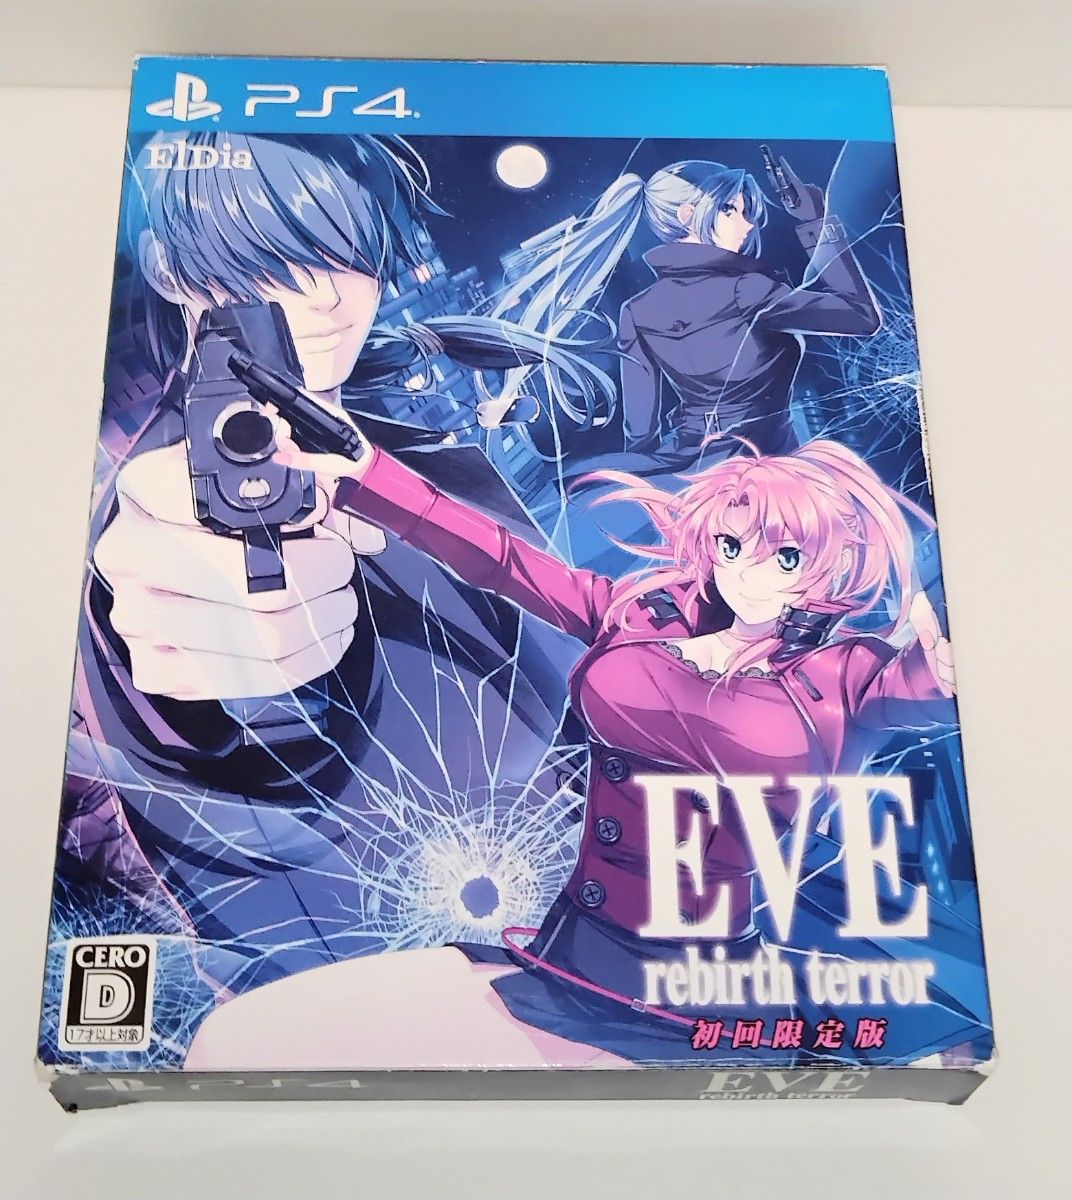 【PS4】 EVE rebirth terror [初回限定版]　イヴ　リバーステラー　EVE burst error R 収録